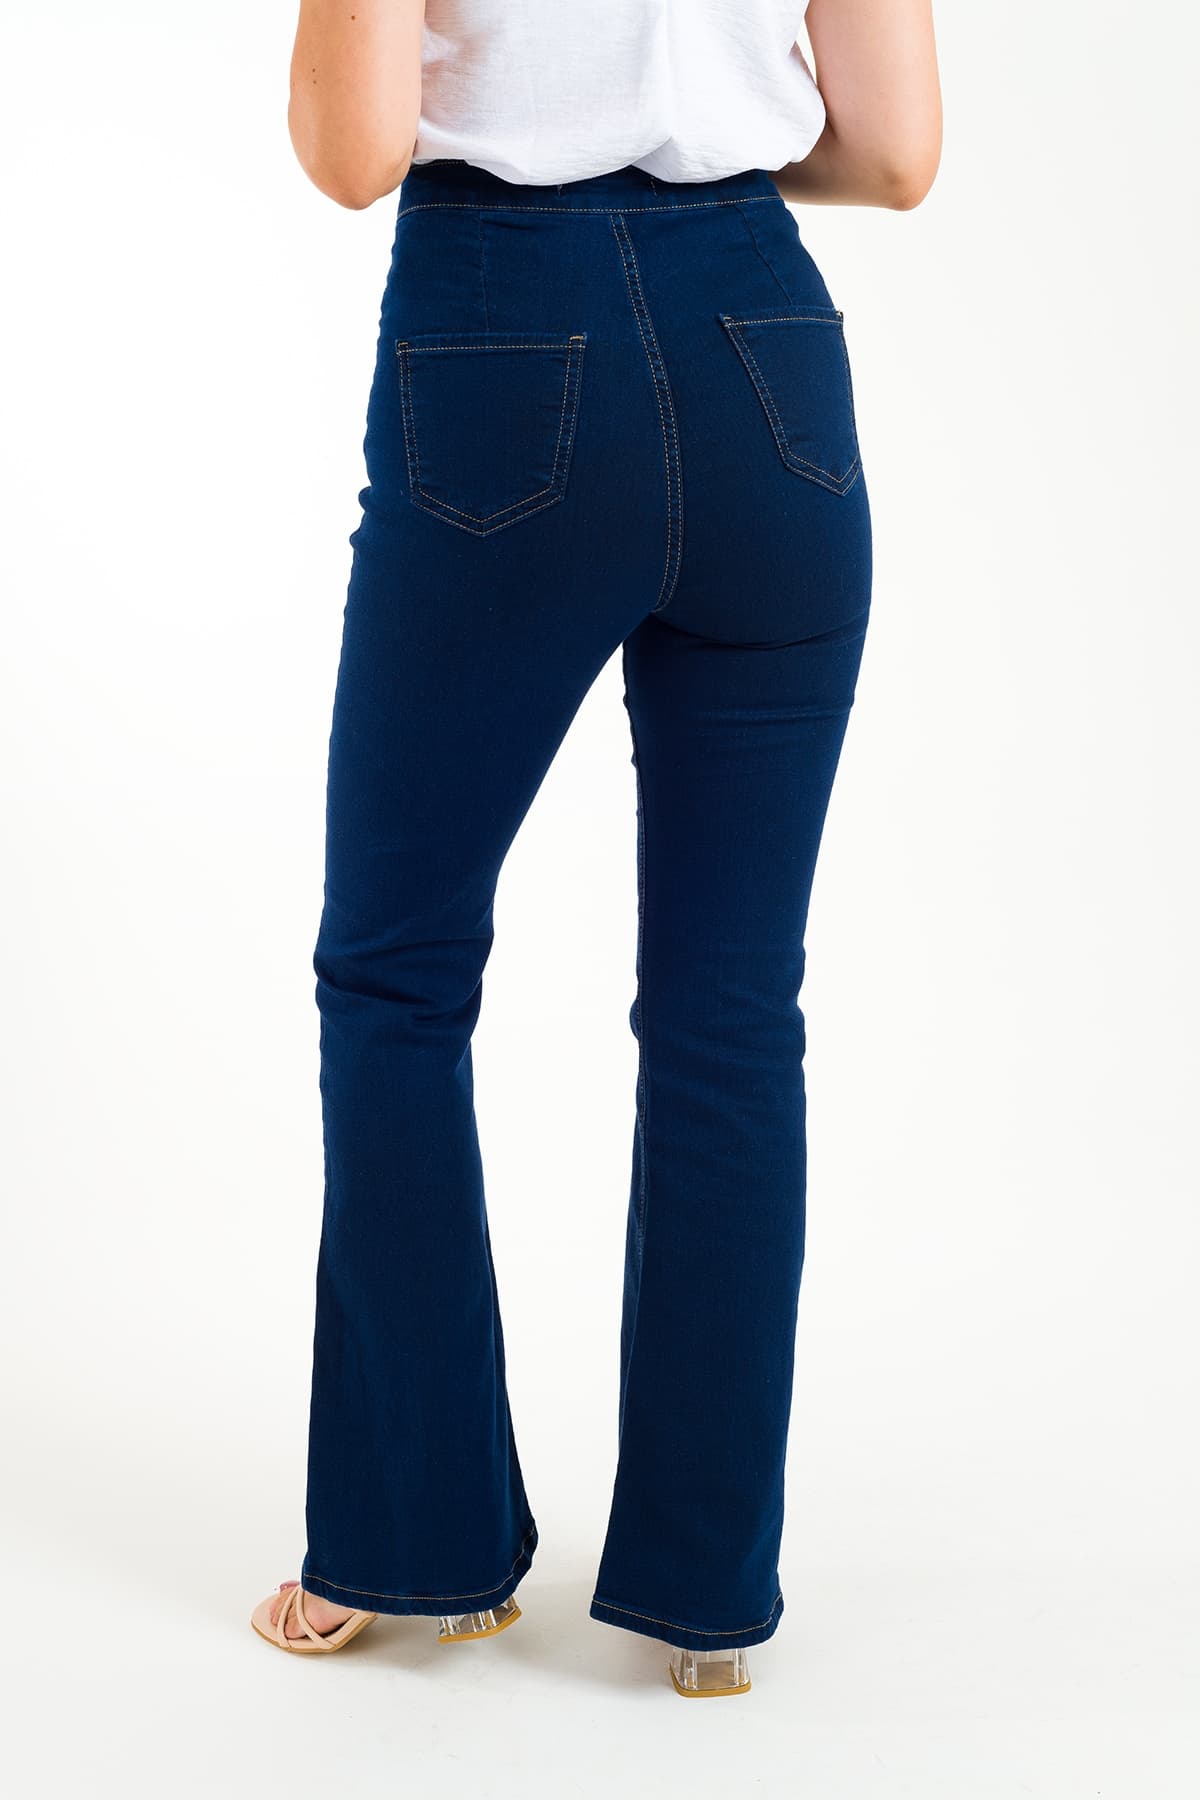 ZDN 9237 İspanyol Paça Düz Model Kadın Kot Pantolon